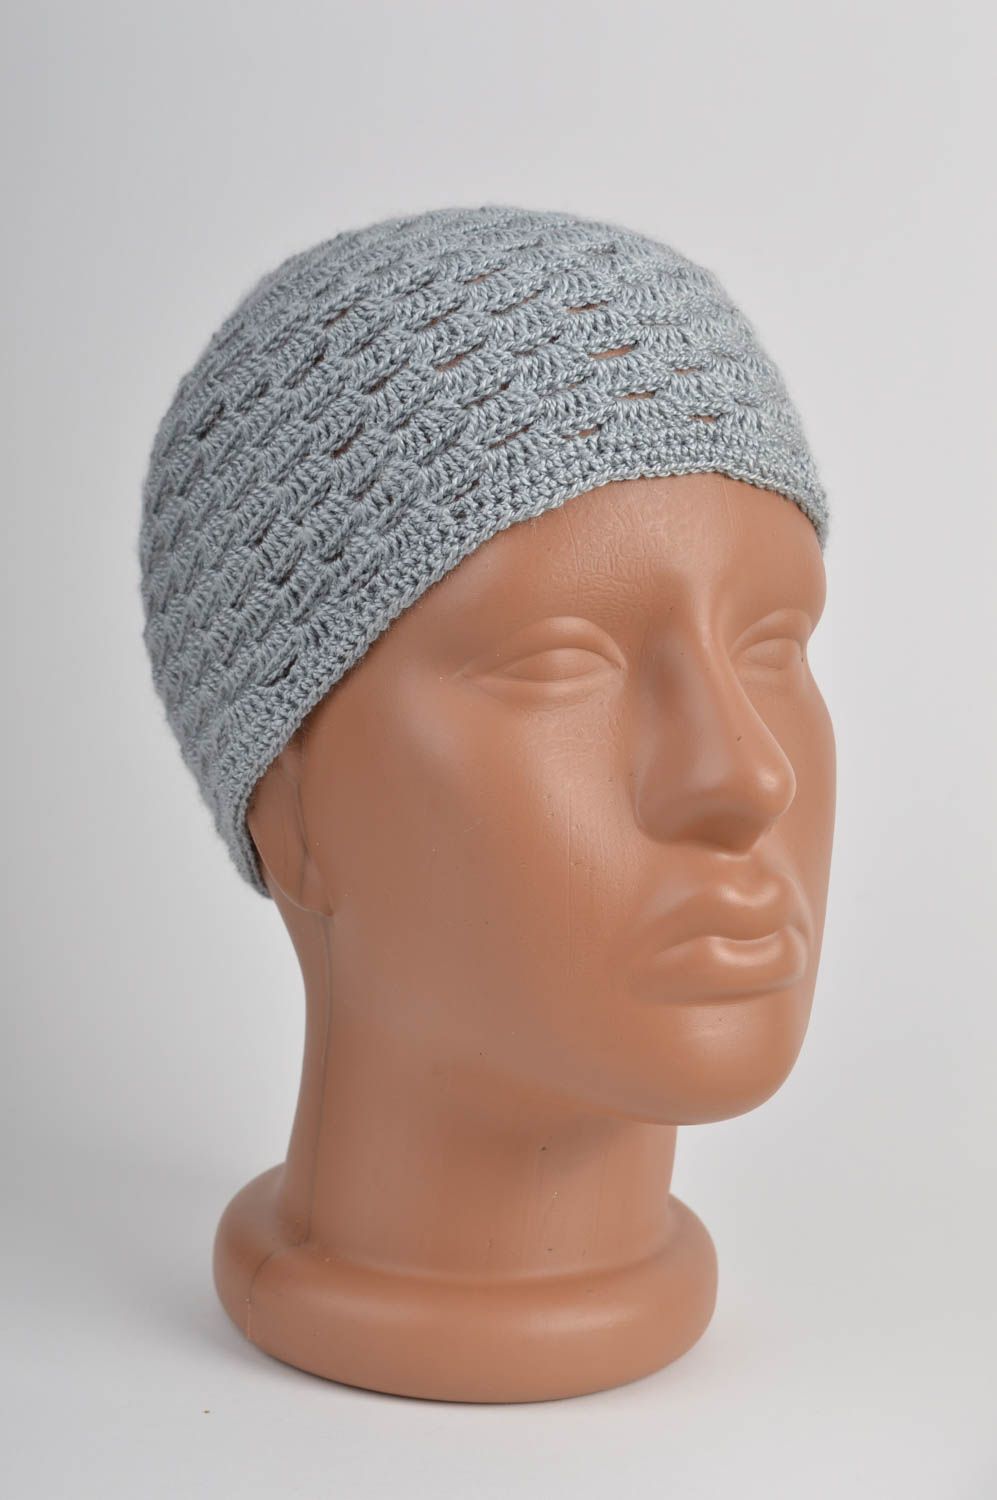 Handmade cute grey cap crocheted unusual hat for girls children accessory photo 2